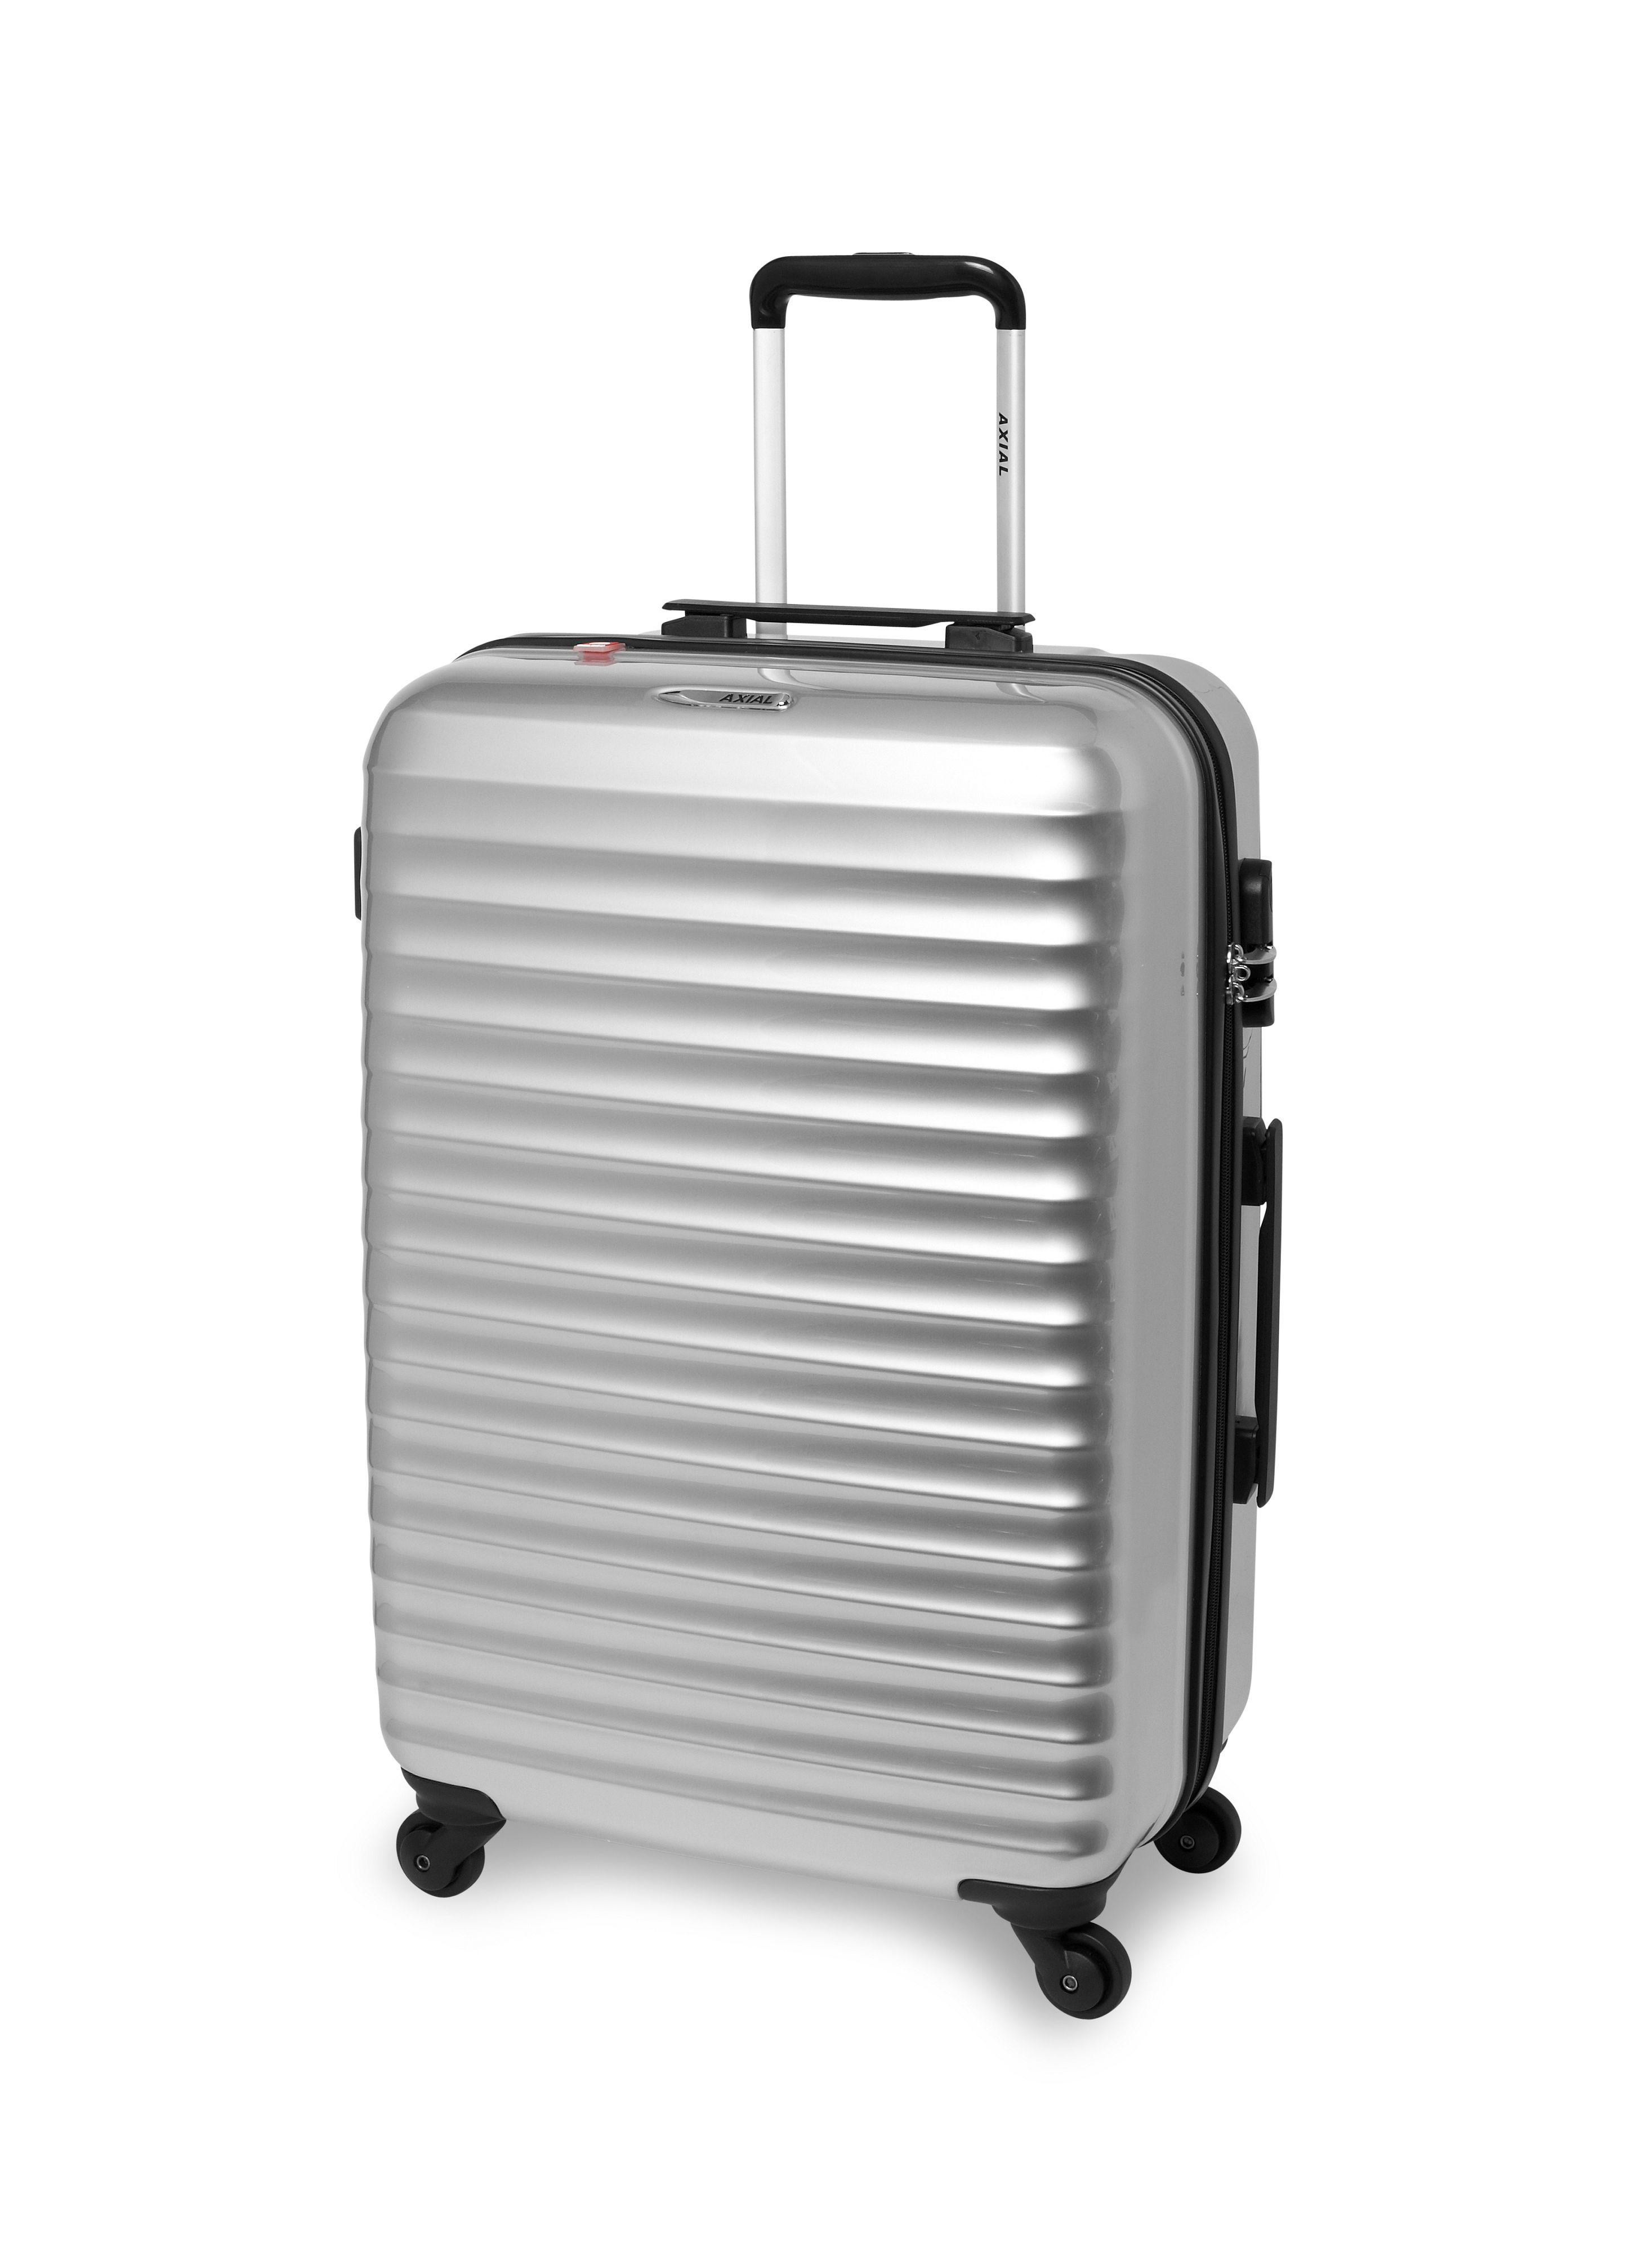 Lyst - Delsey Axial Silver 4 Wheel Hard Medium Suitcase in Metallic ...